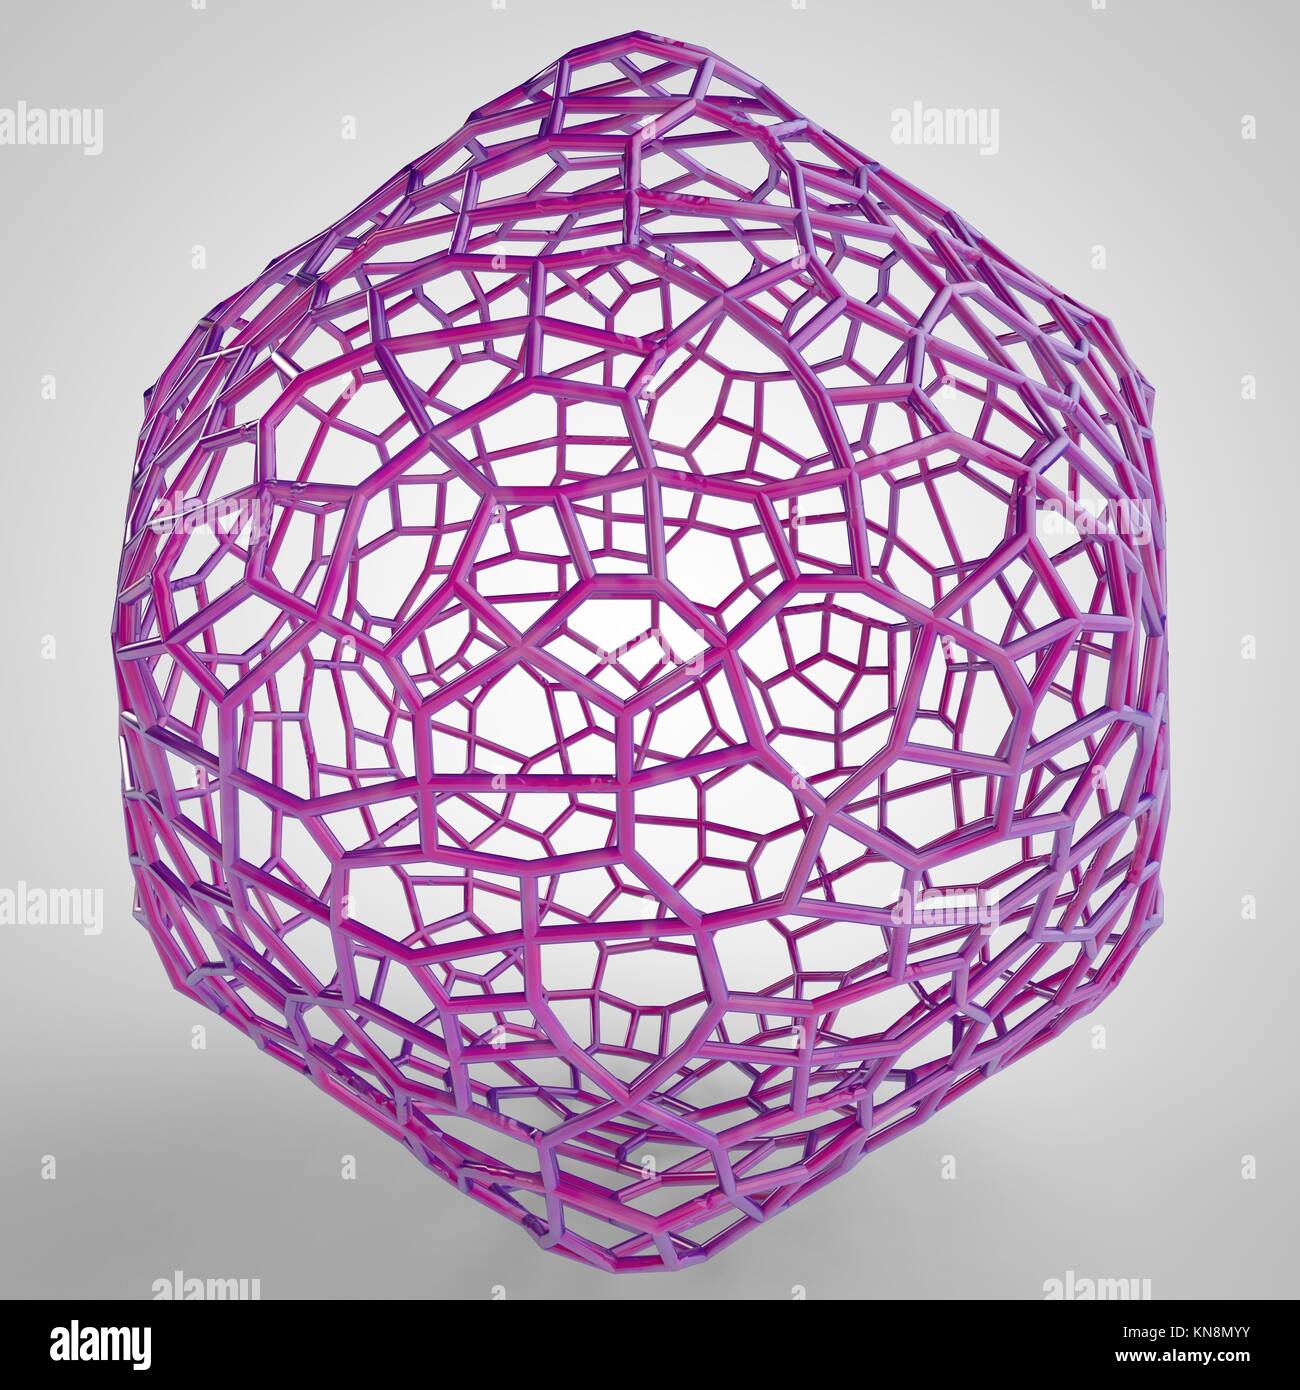 3D illustration of globe connection mesh model. Stock Photo